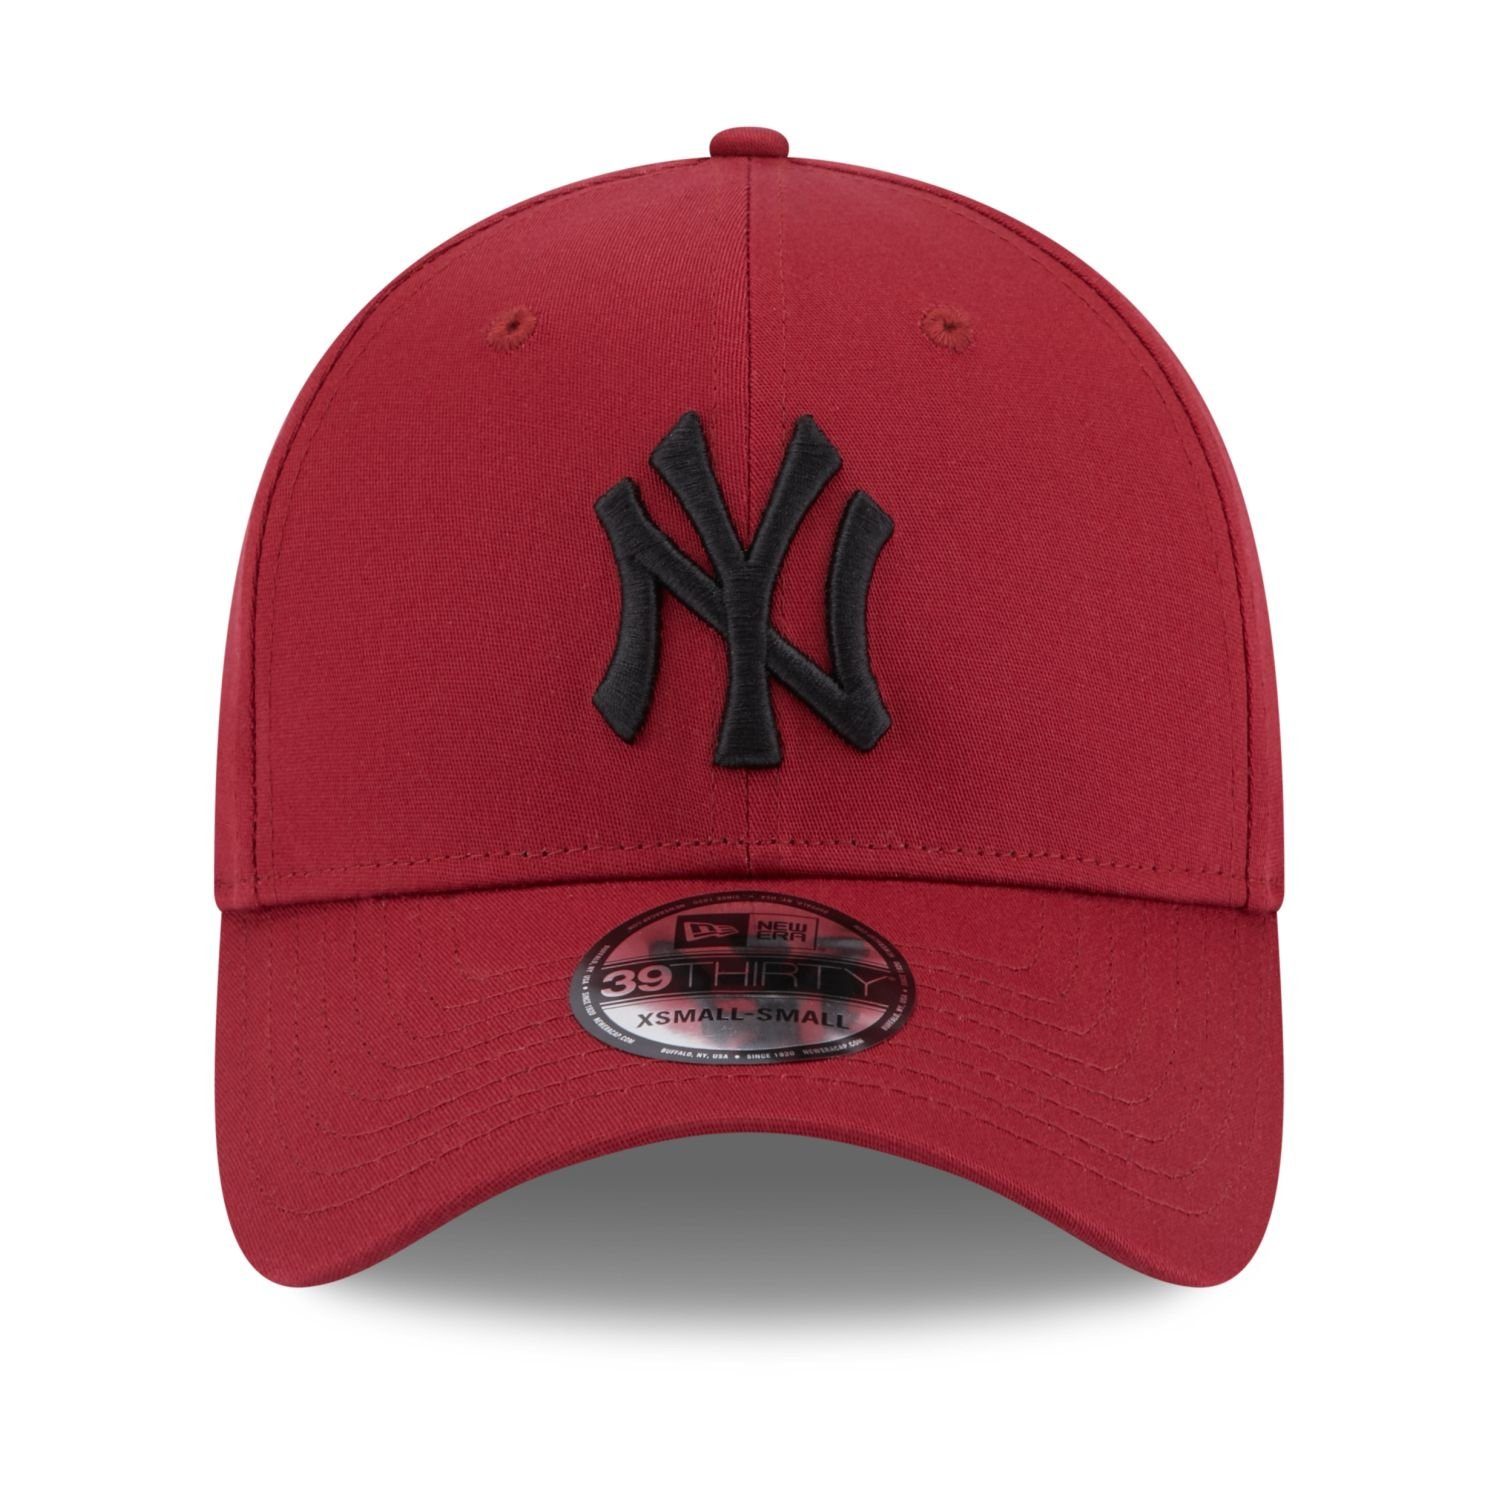 Stretch New 39Thirty Era Yankees Flex cardinal New York Cap